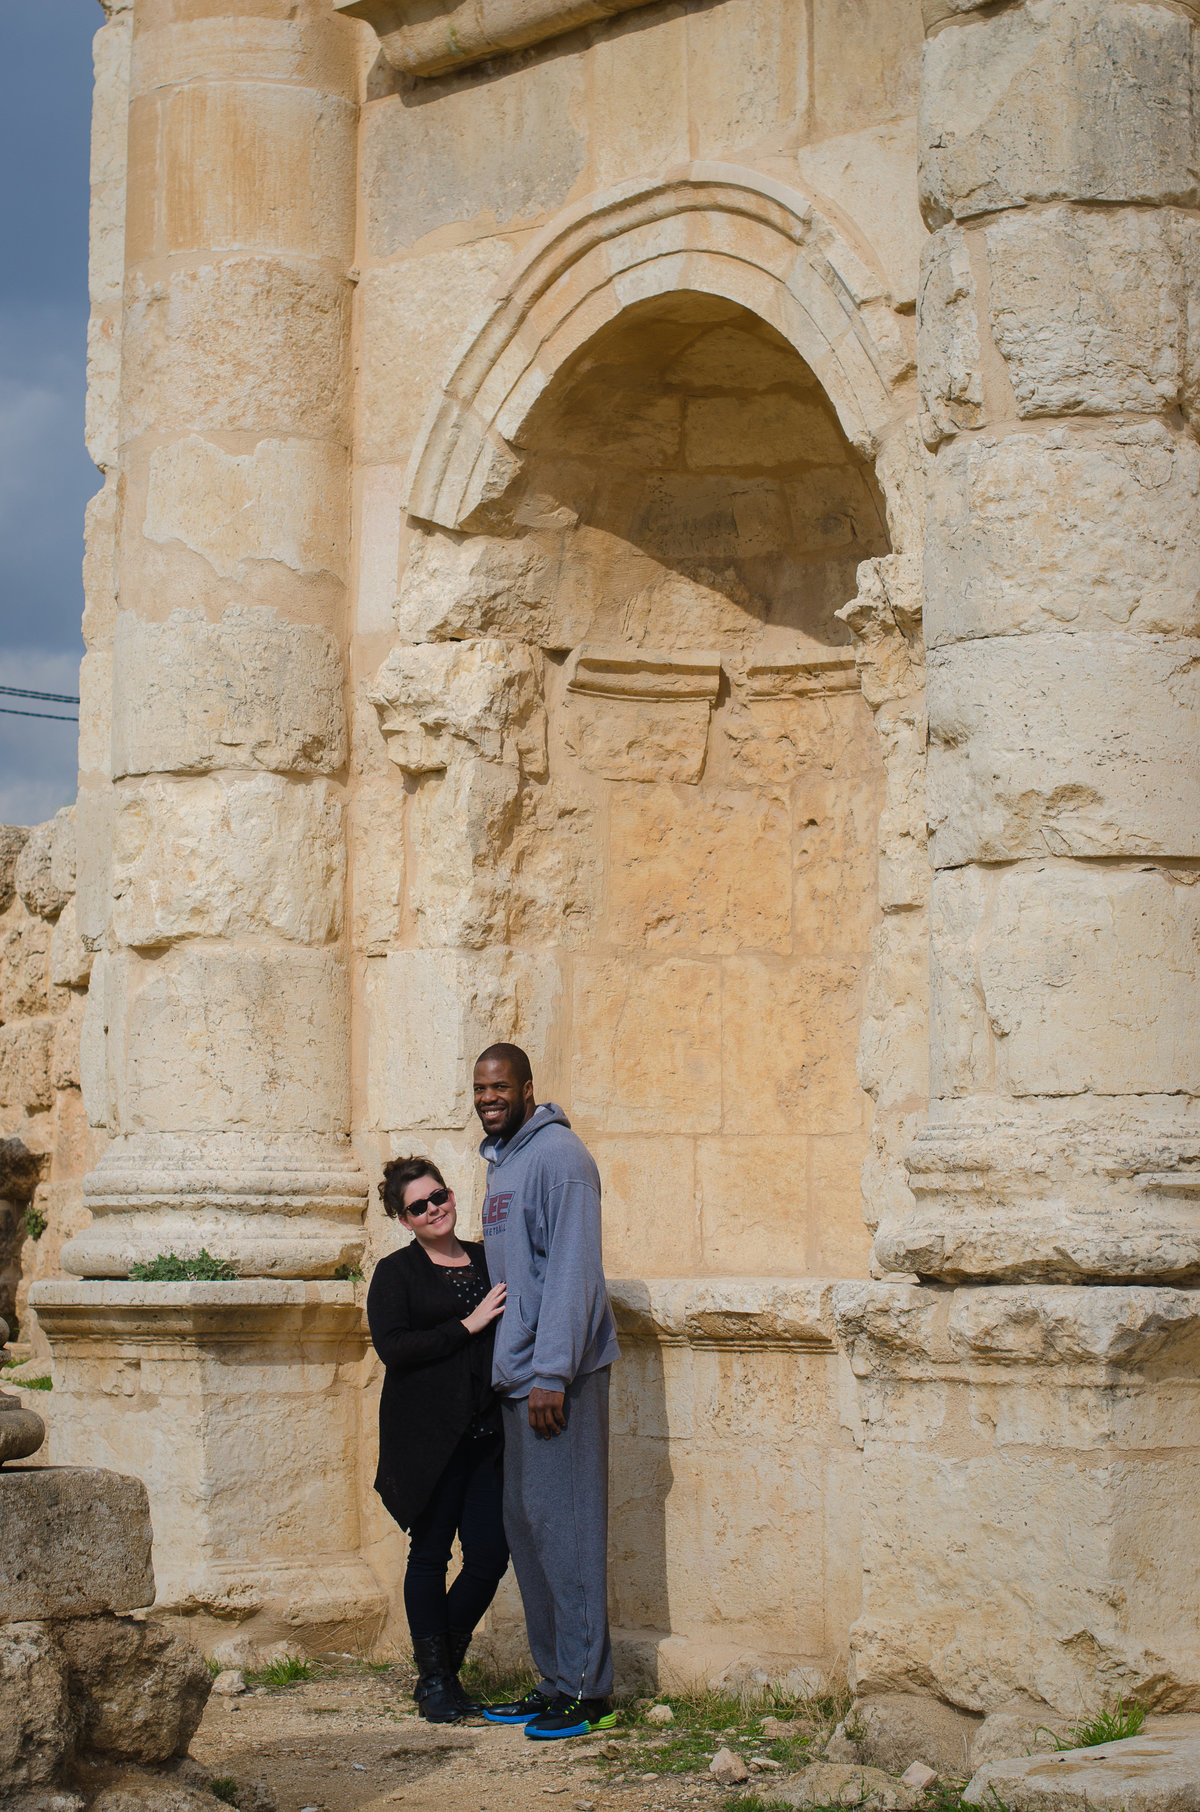 Jill and Desmond Blue standing in an arch at the Roman ruins of Jaresh, Jordan